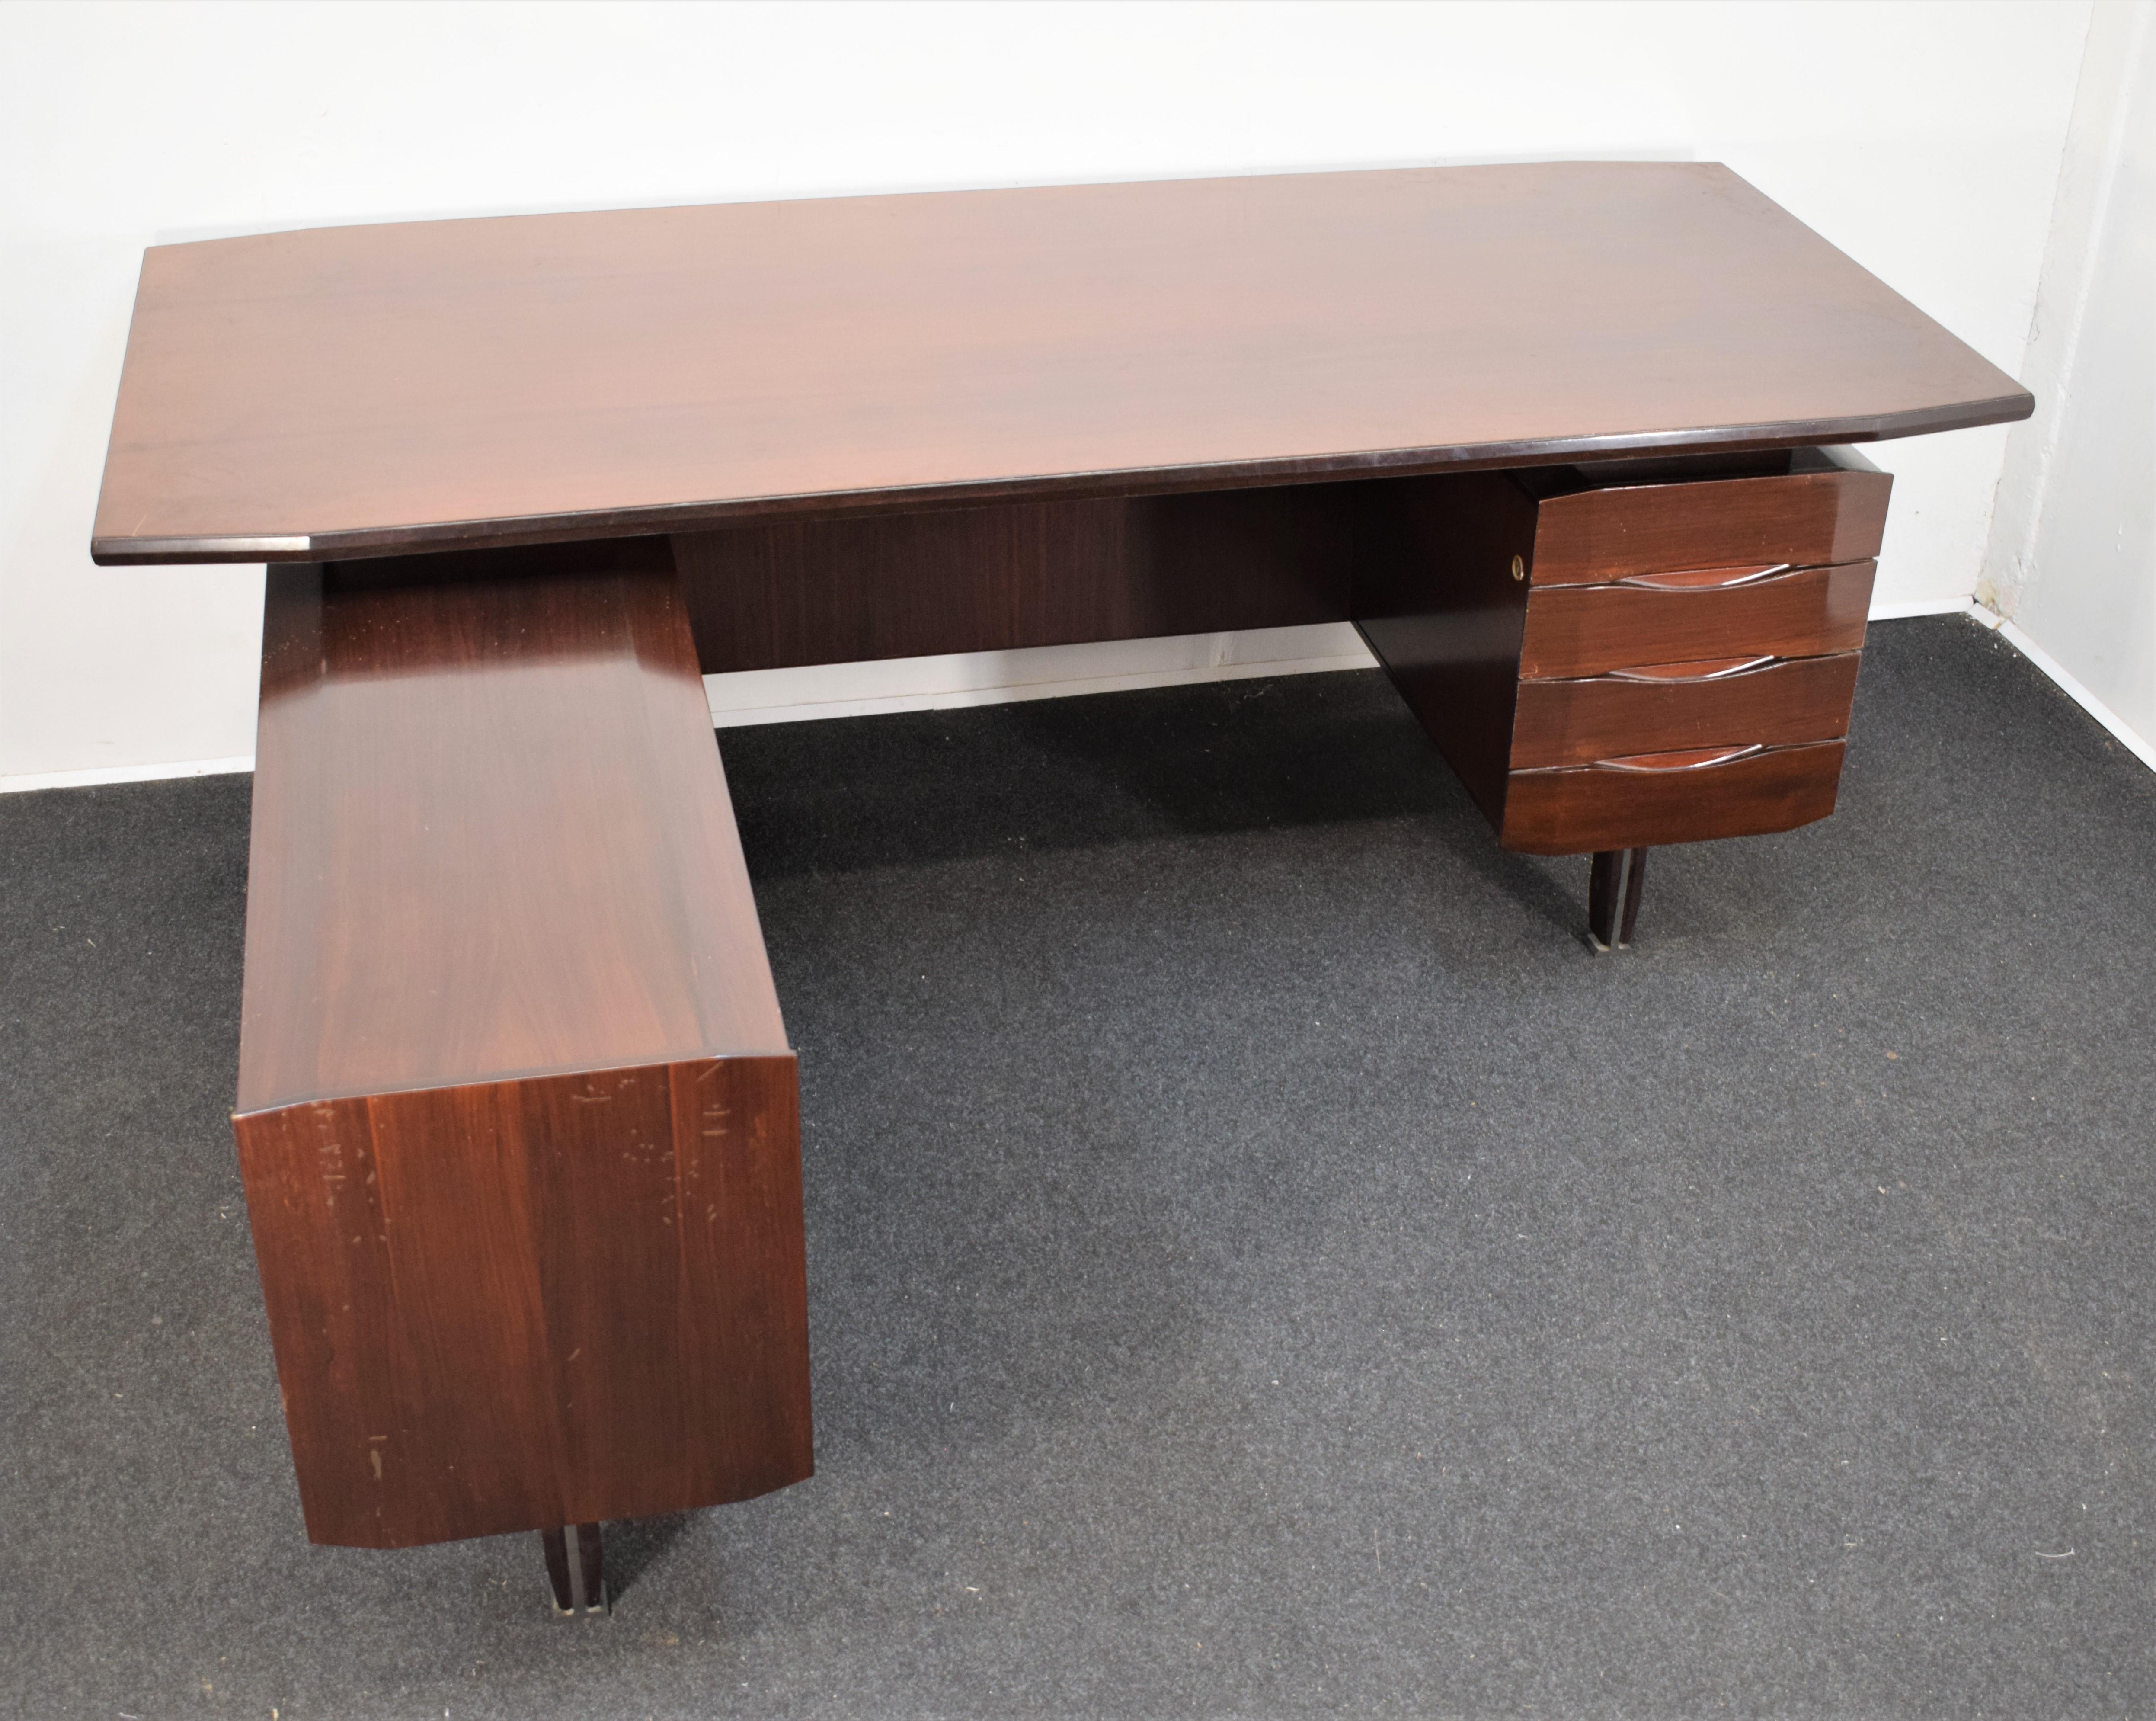 Italian desk, wood and metal, 1960s.

Dimensions: H= 75 cm; W= 200 cm; D= 168 cm.